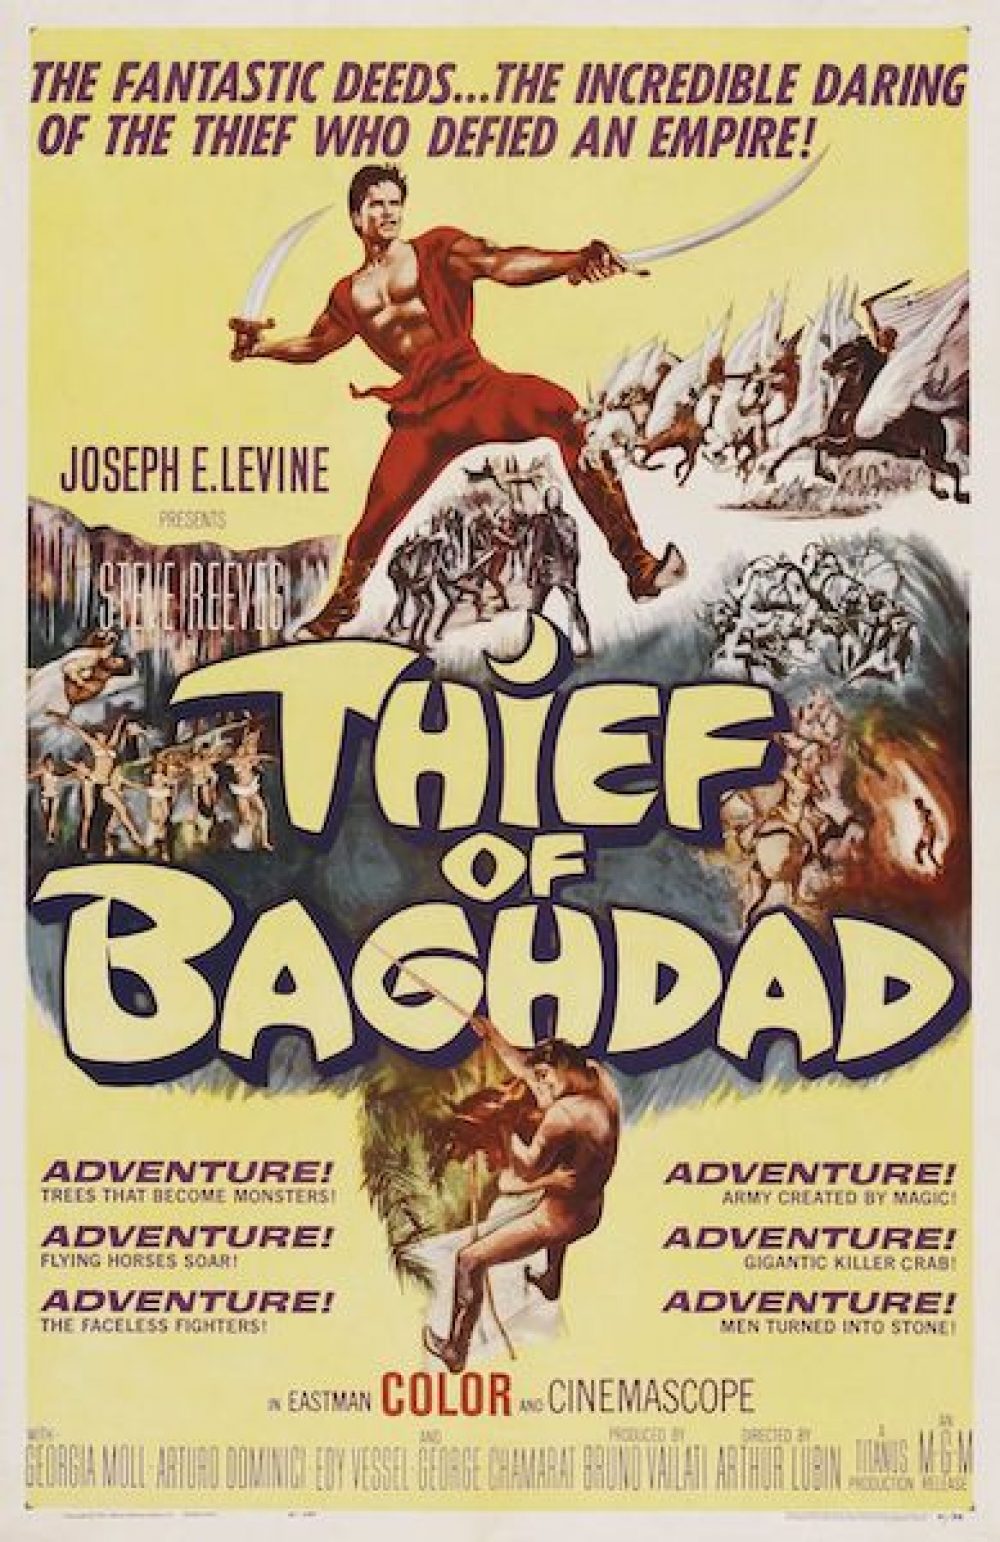 THE THIEF OF BAGDAD